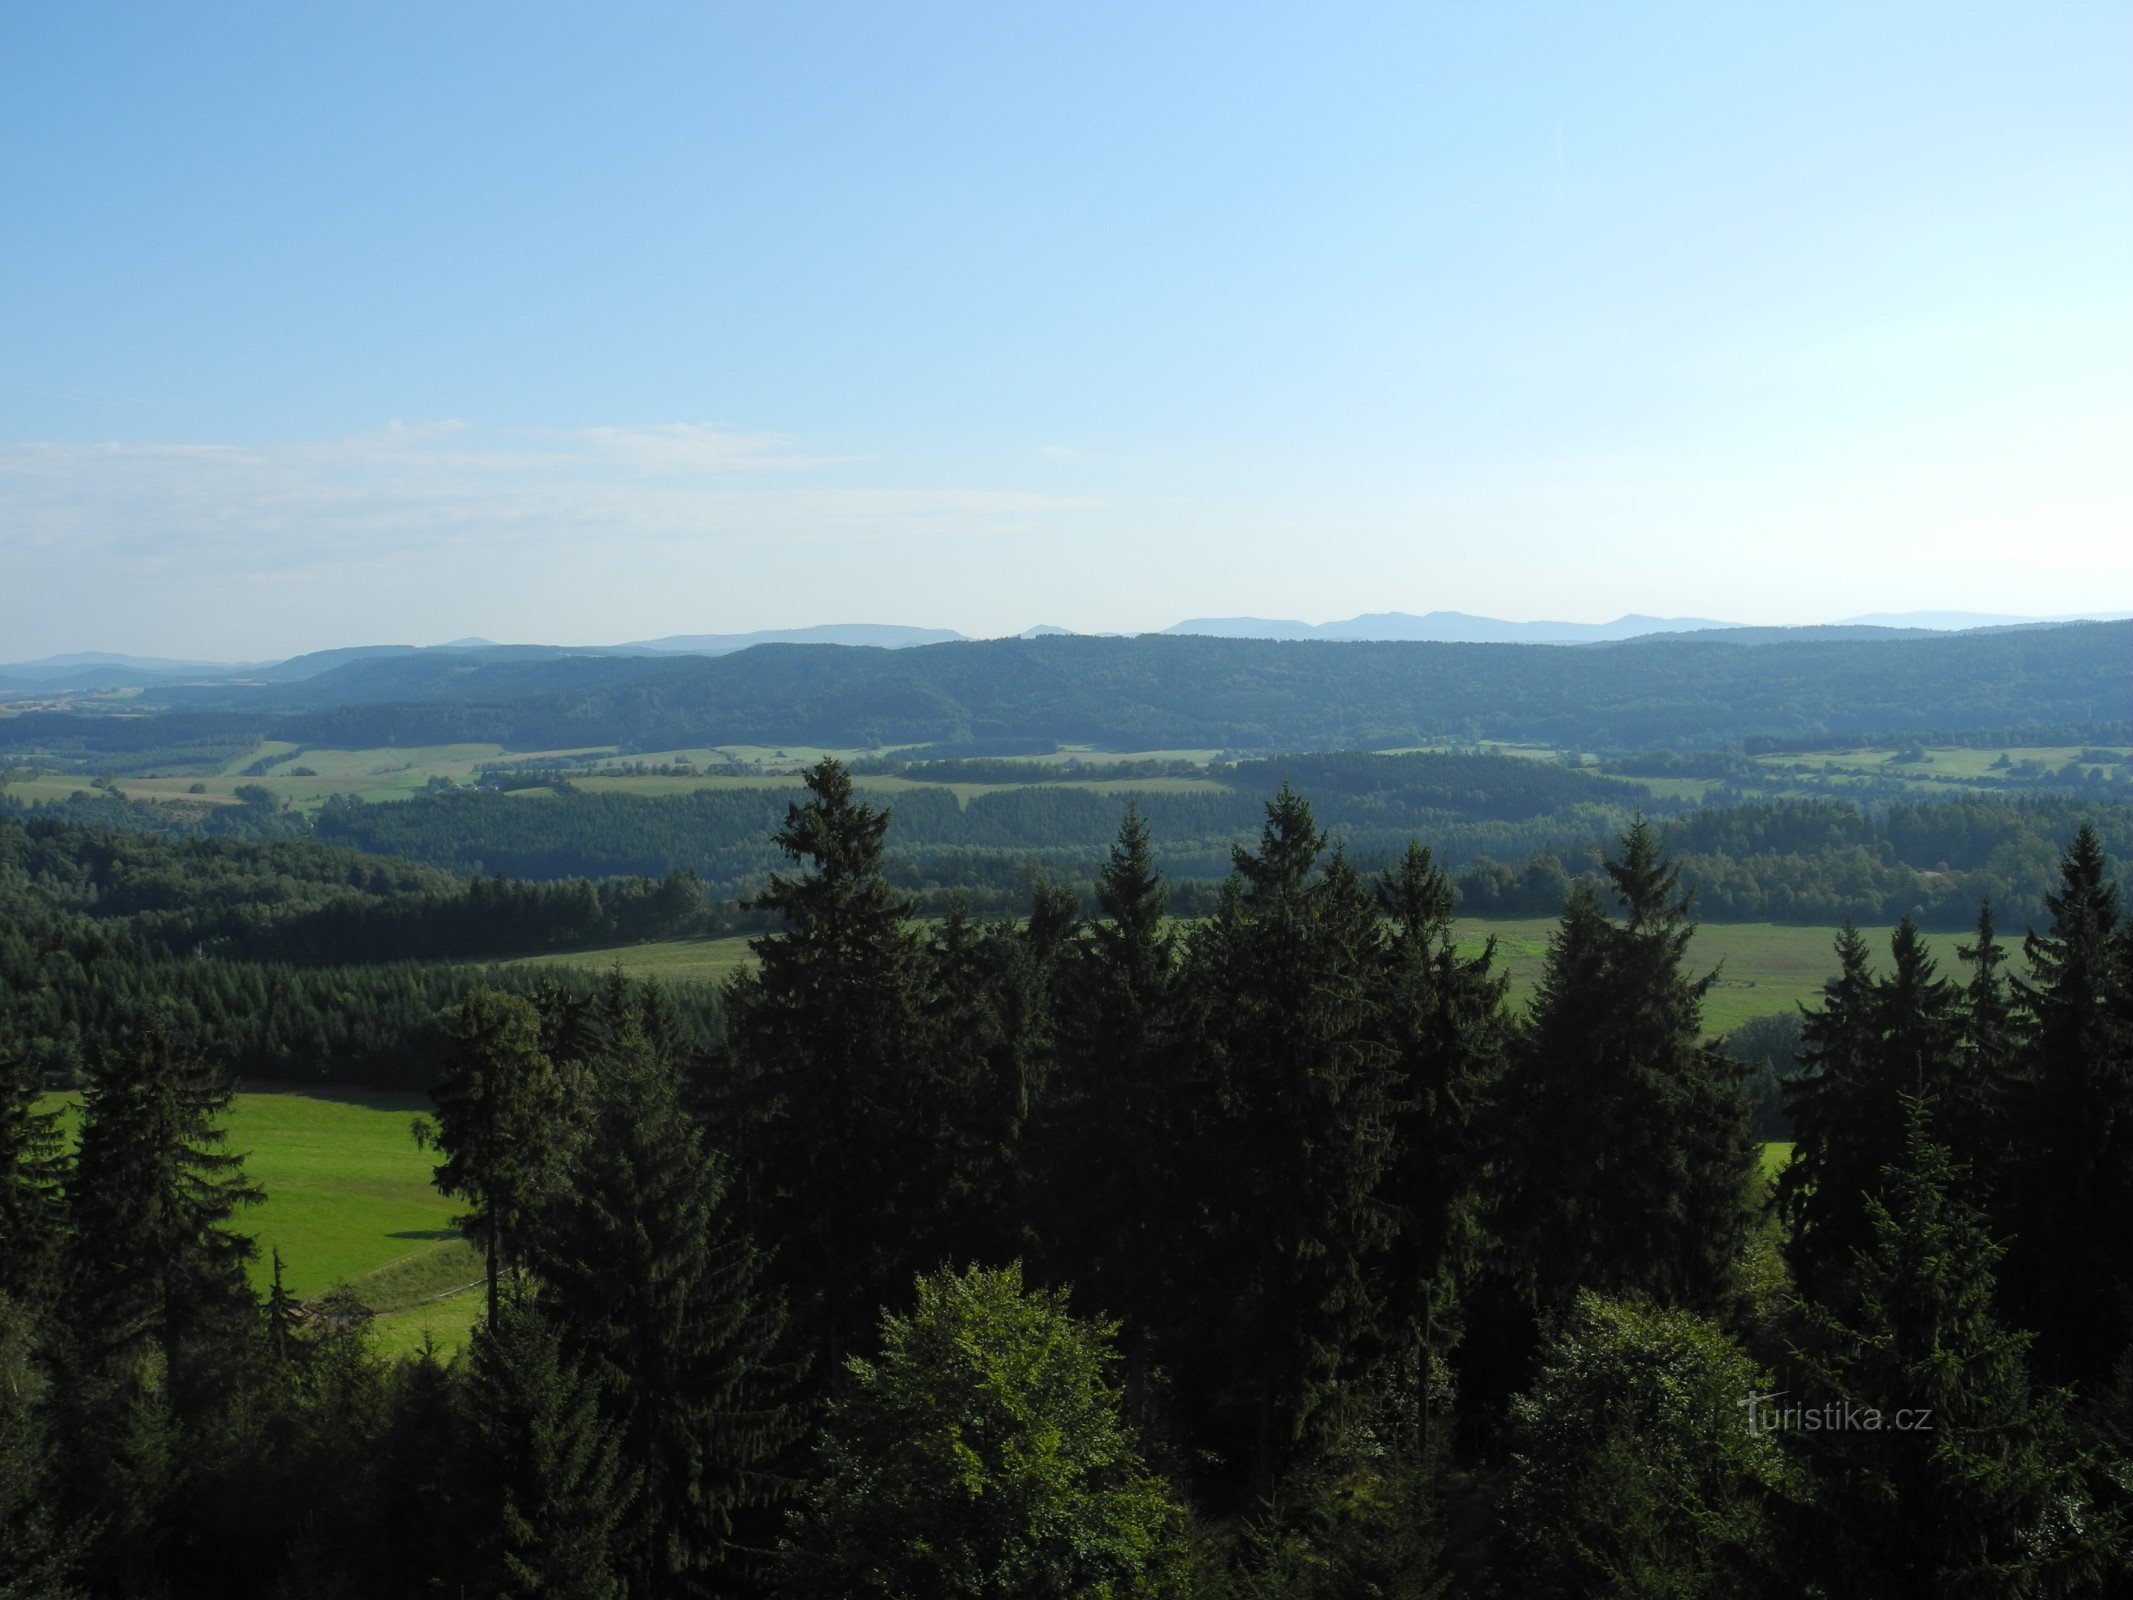 Núi Jestřebí thu hút du khách mới đến các chuyến đi